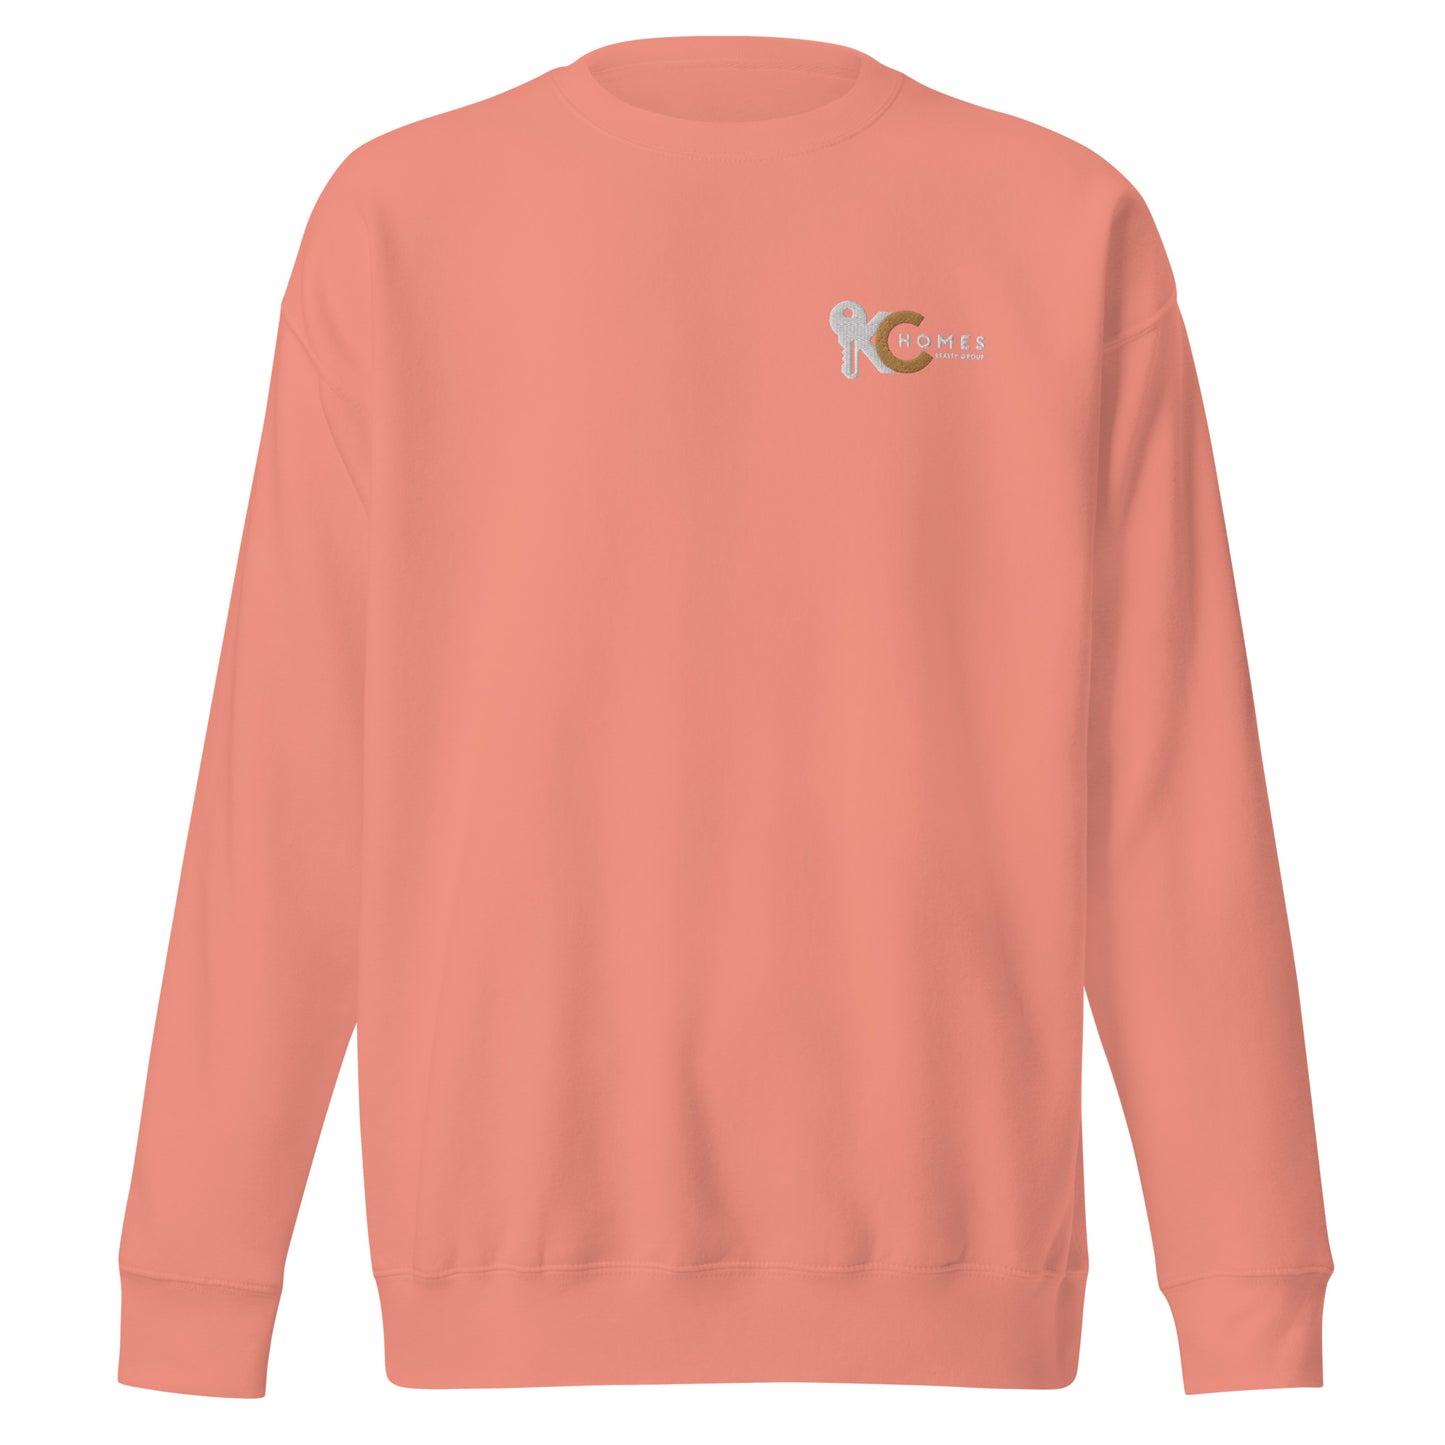 KC Homes Unisex Premium Sweatshirt